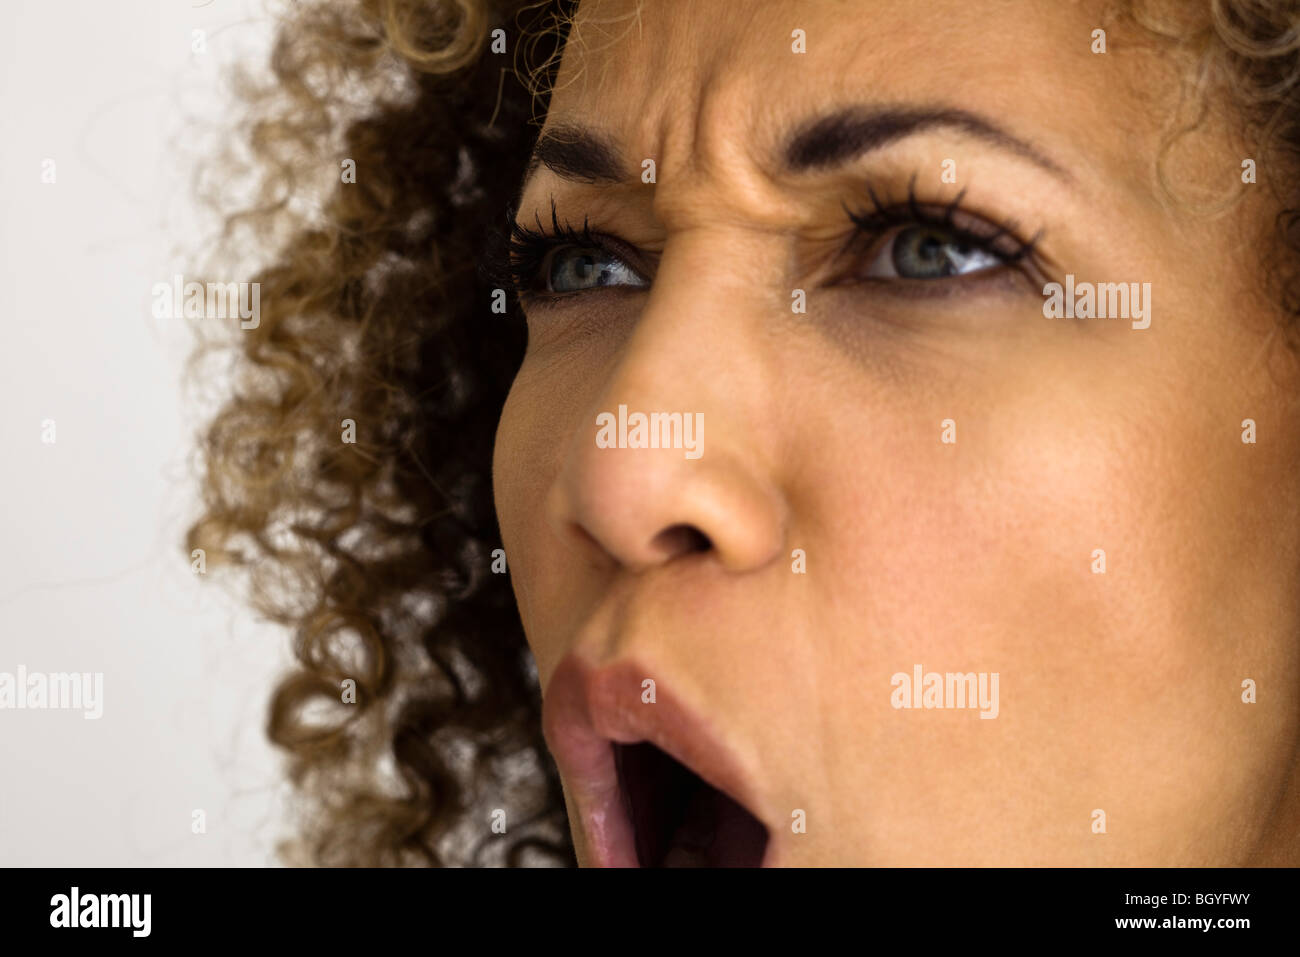 Woman furrowing brow, shouting , close-up Stock Photo